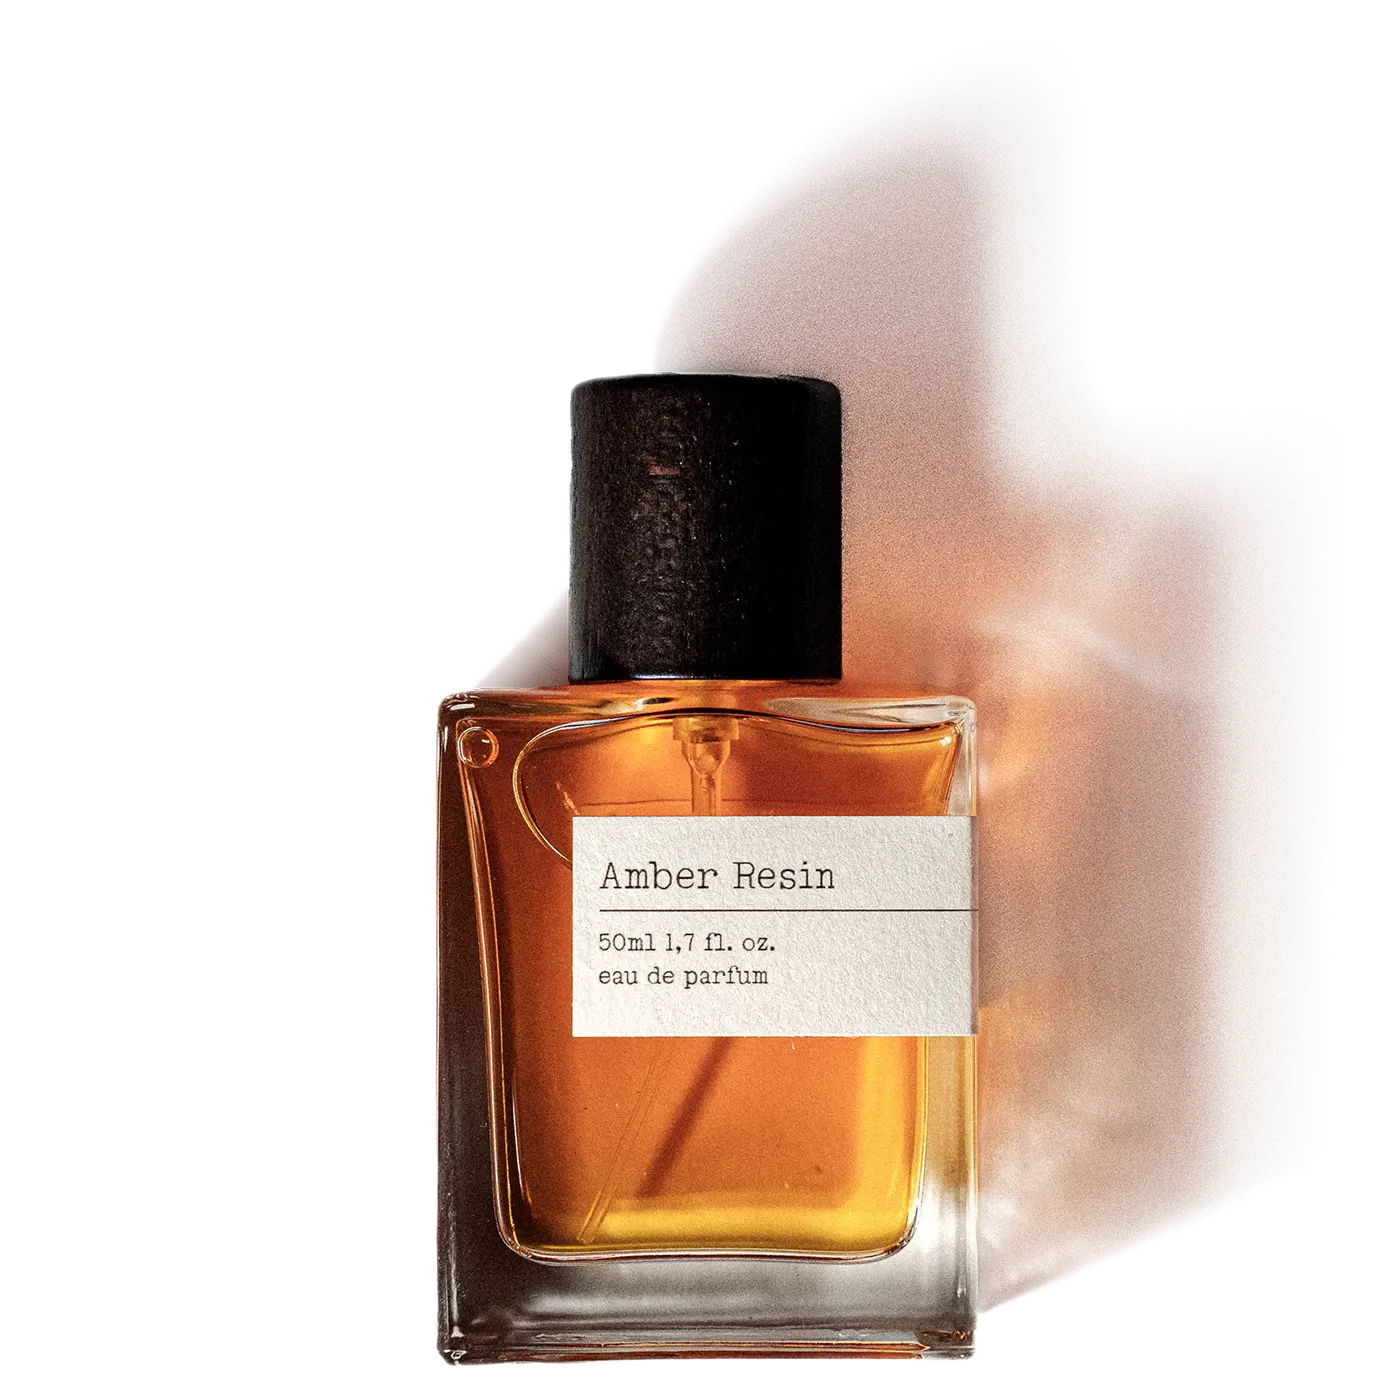 Amber Resin niche perfume - olfactive aesthetics author's niche perfumery